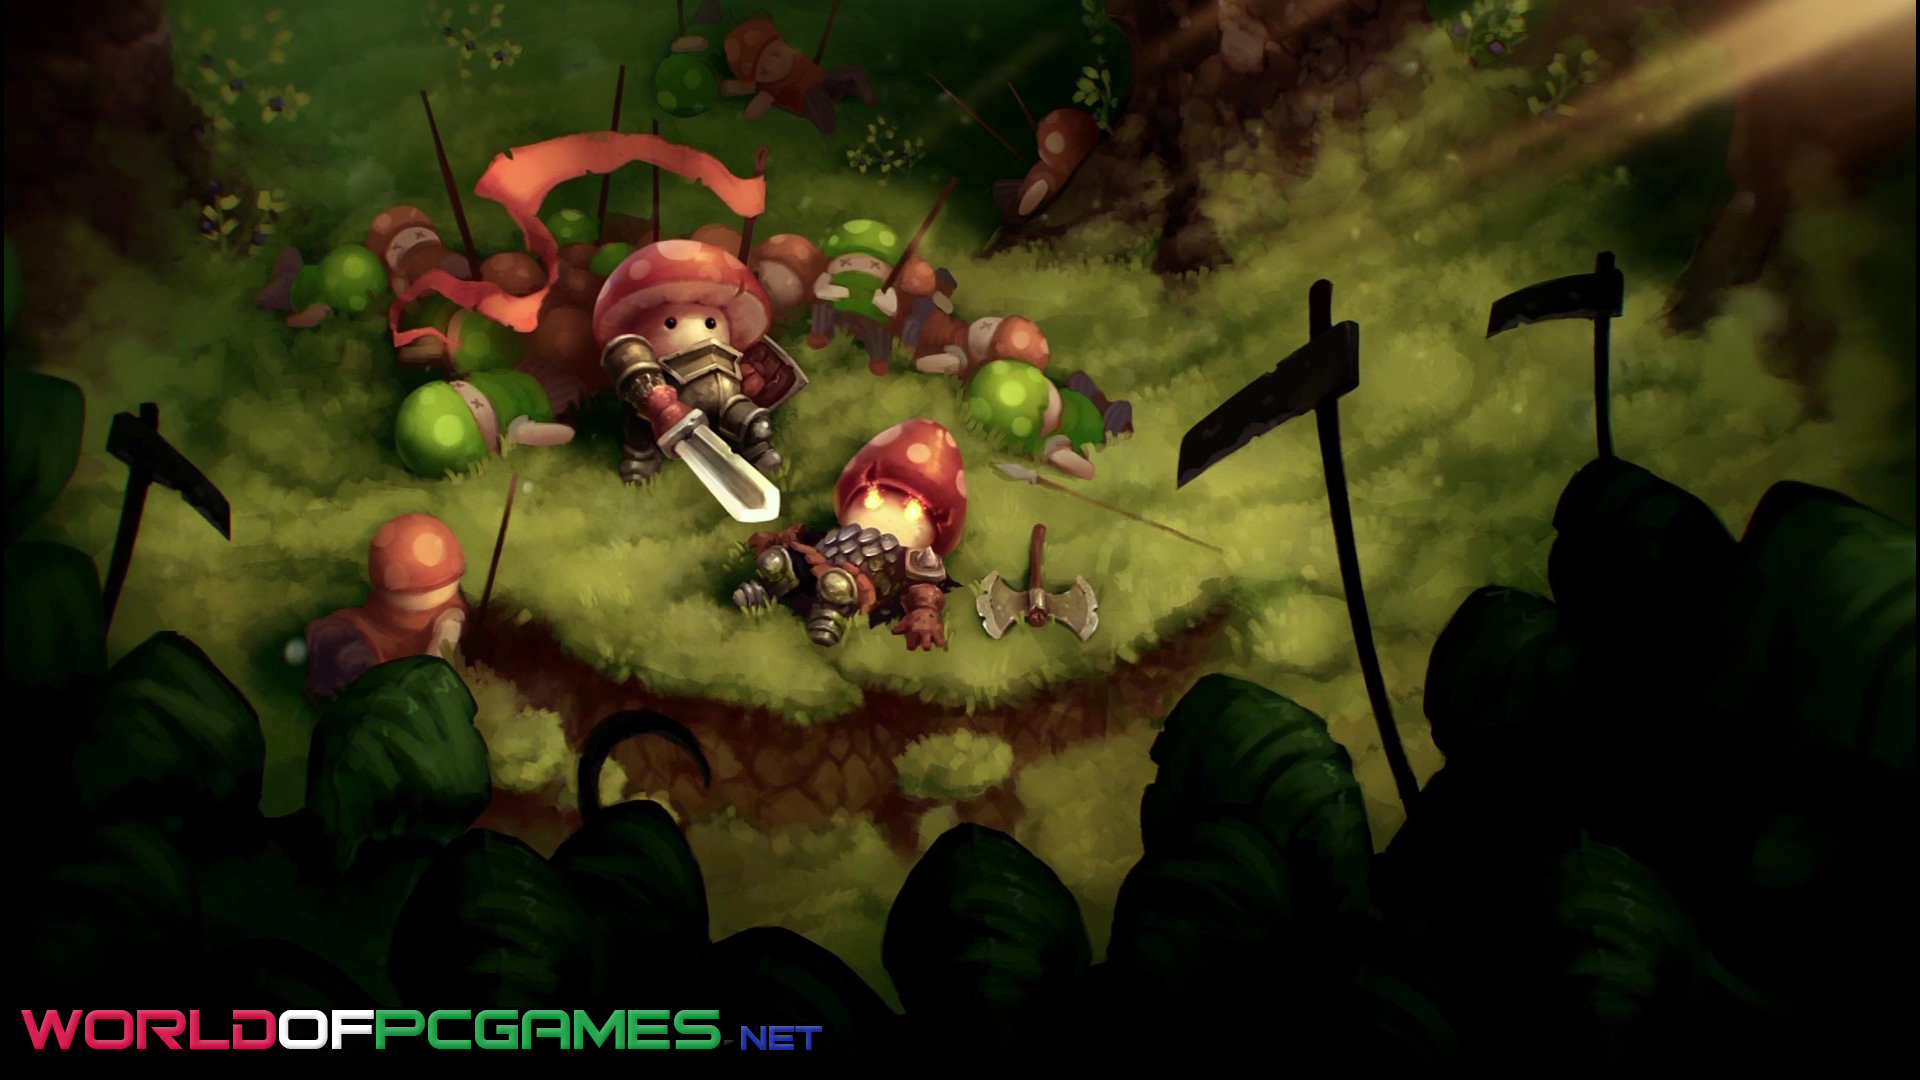 Mushroom Wars 2 Free Download By worldof-pcgames.net